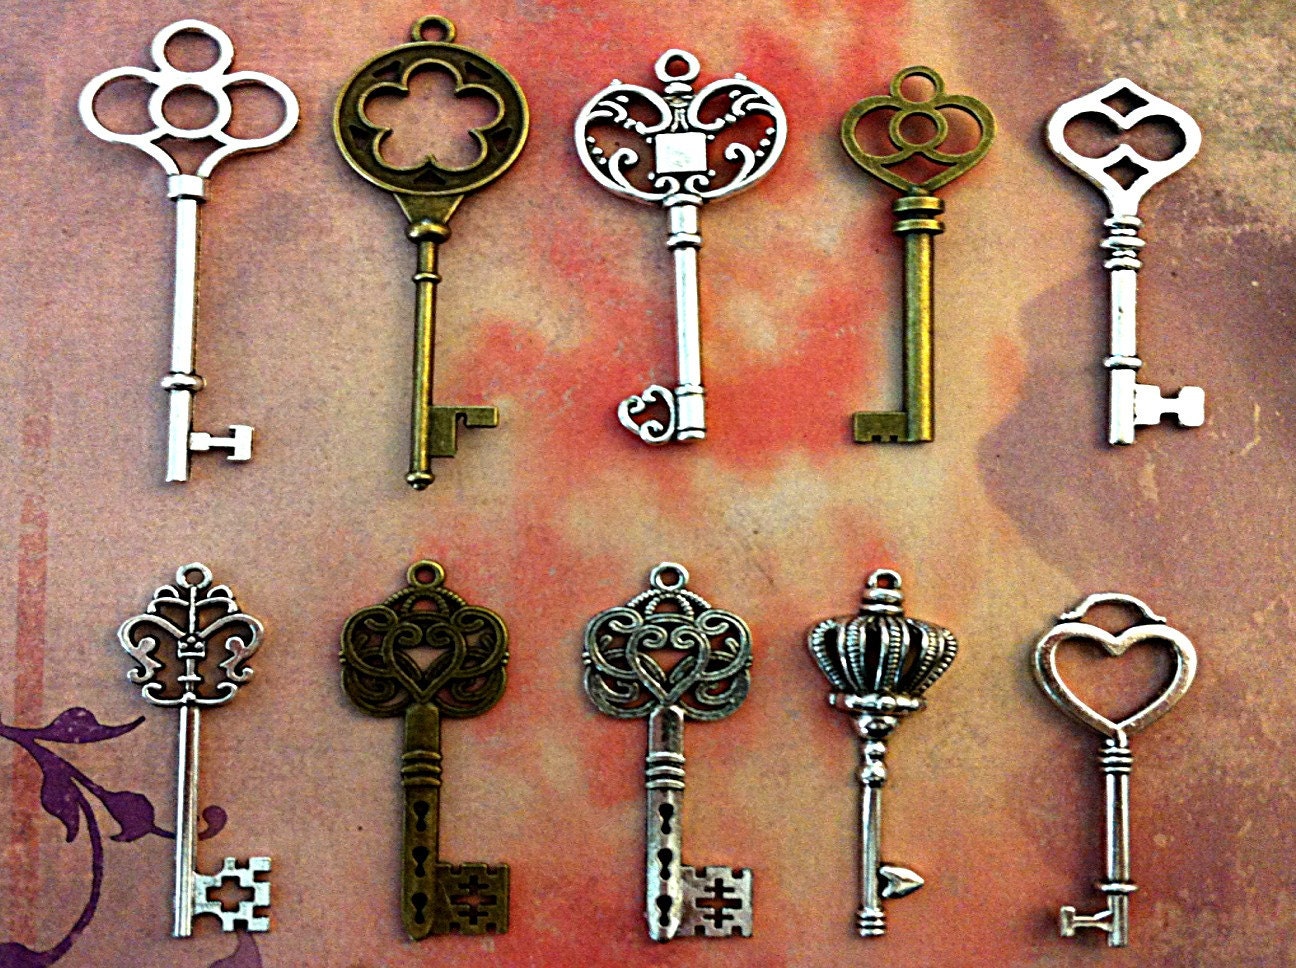 types of keys